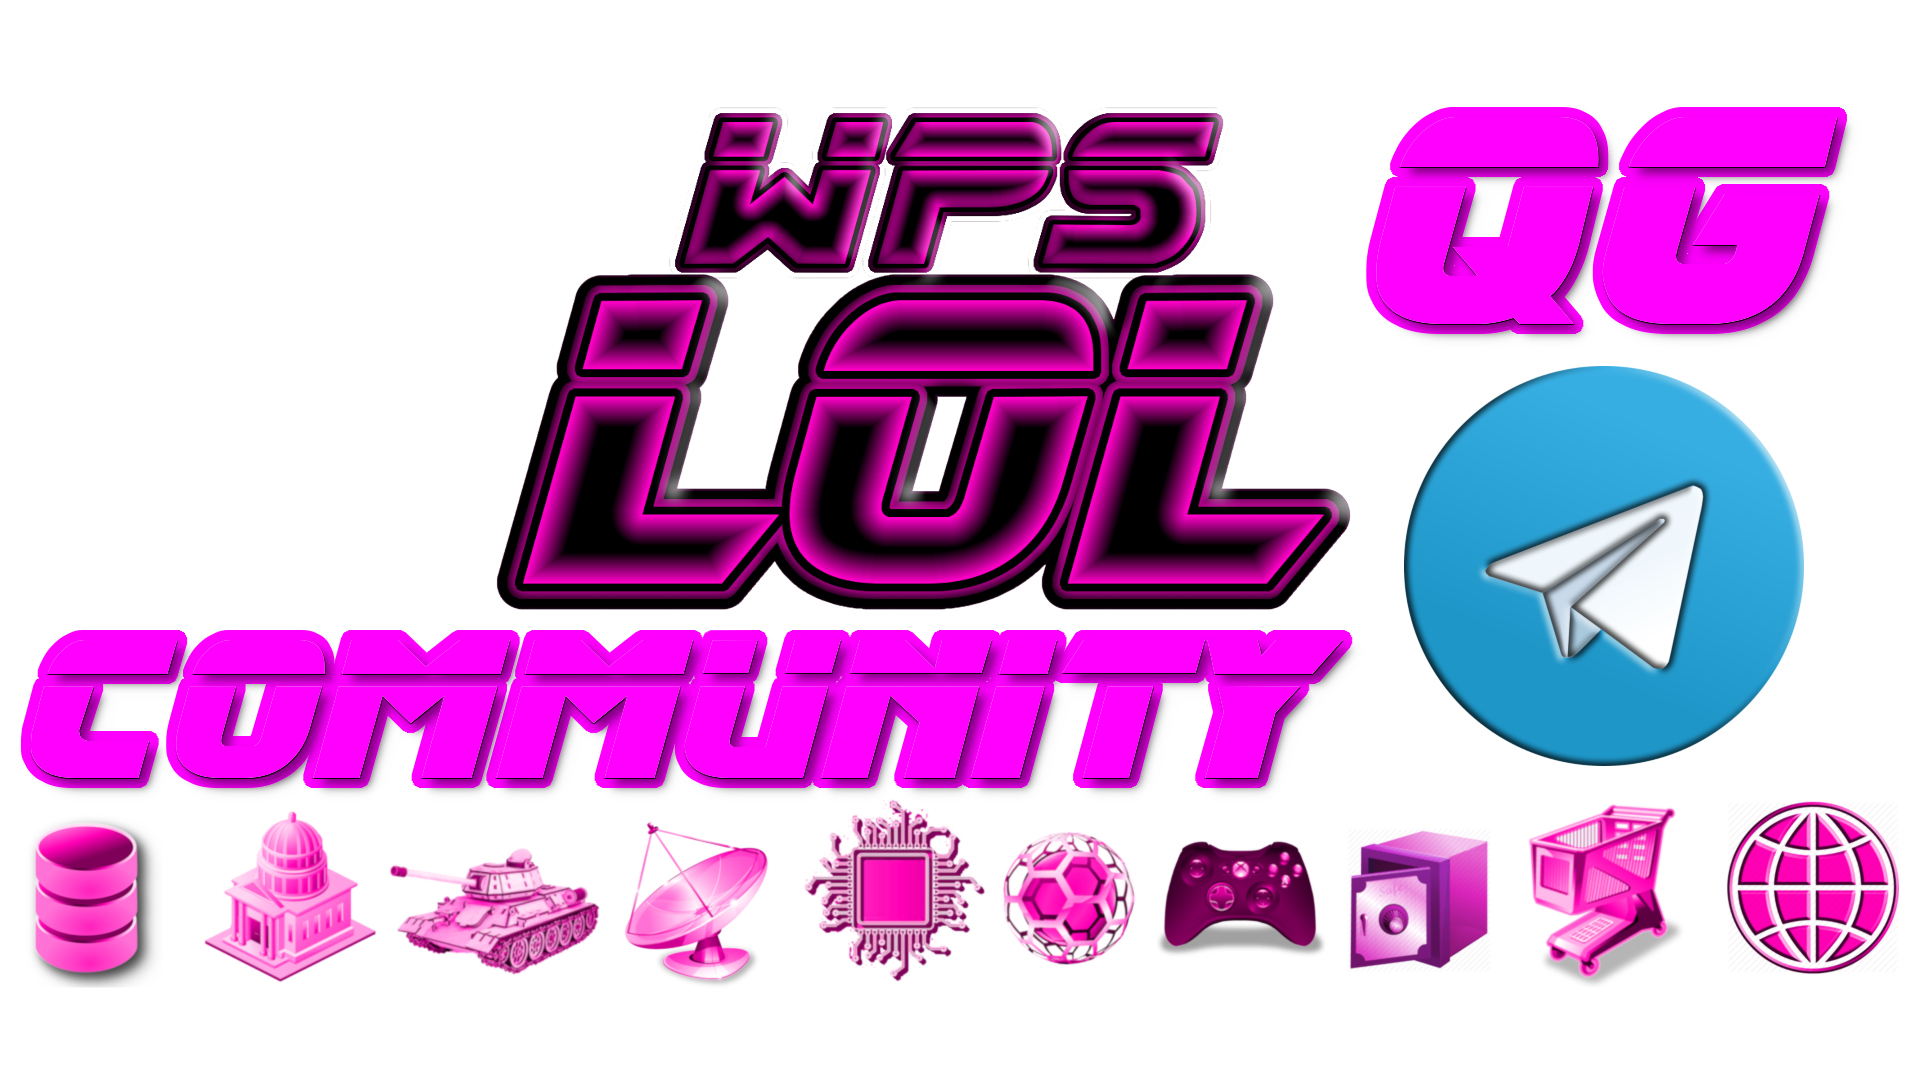 wpslol community qg logo